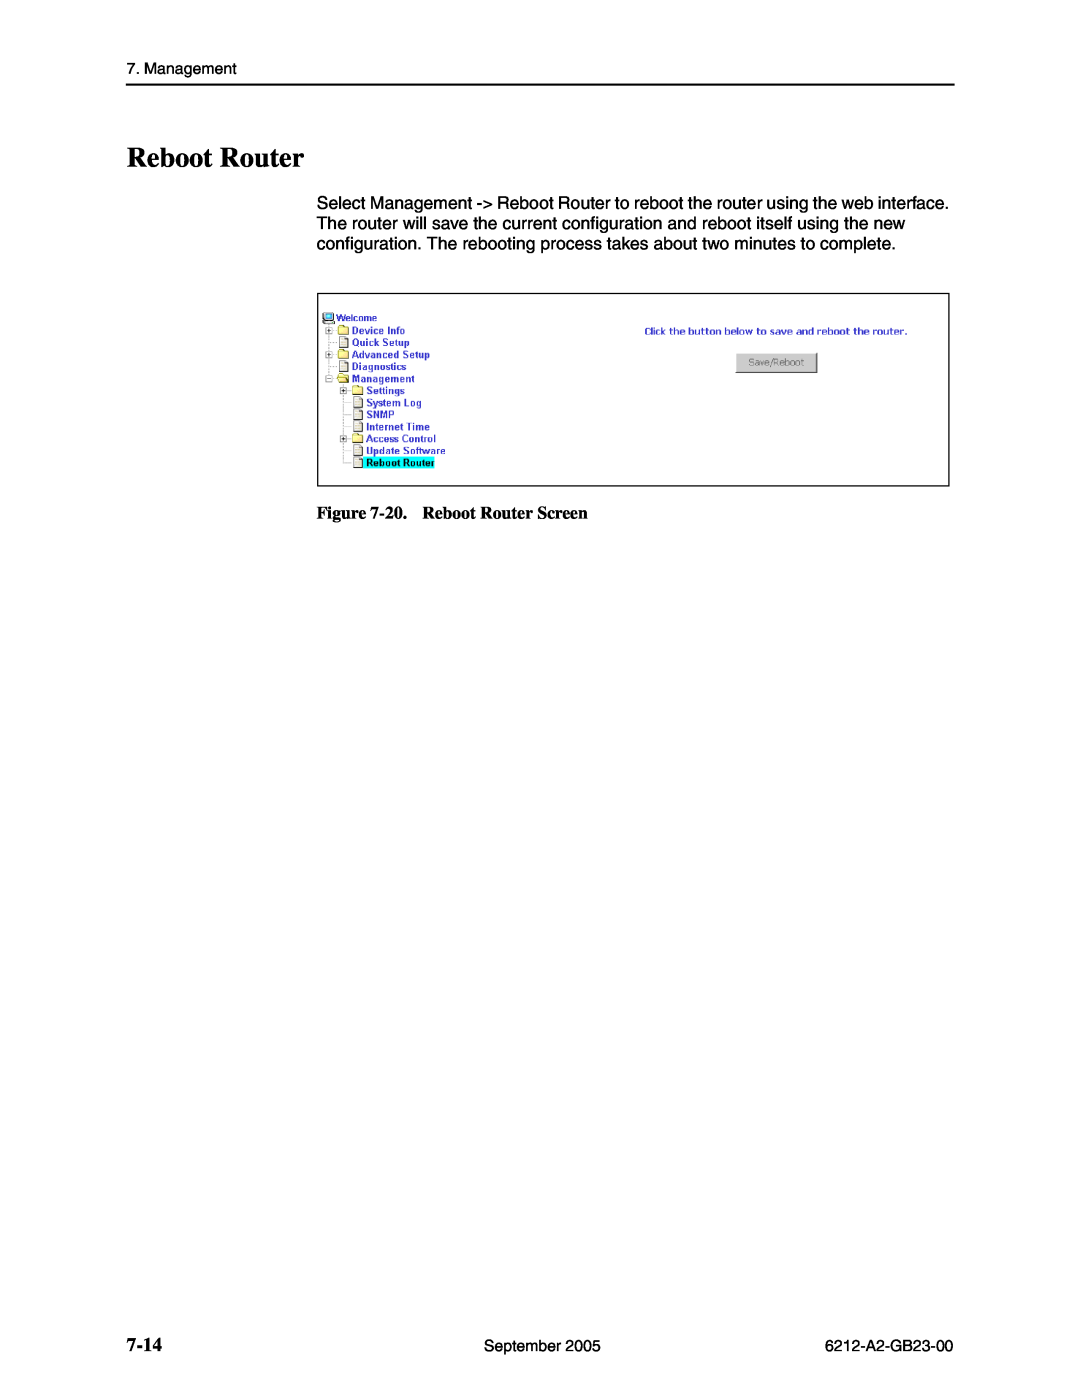 Paradyne 6212-I1 manual 7-14, 20. Reboot Router Screen 